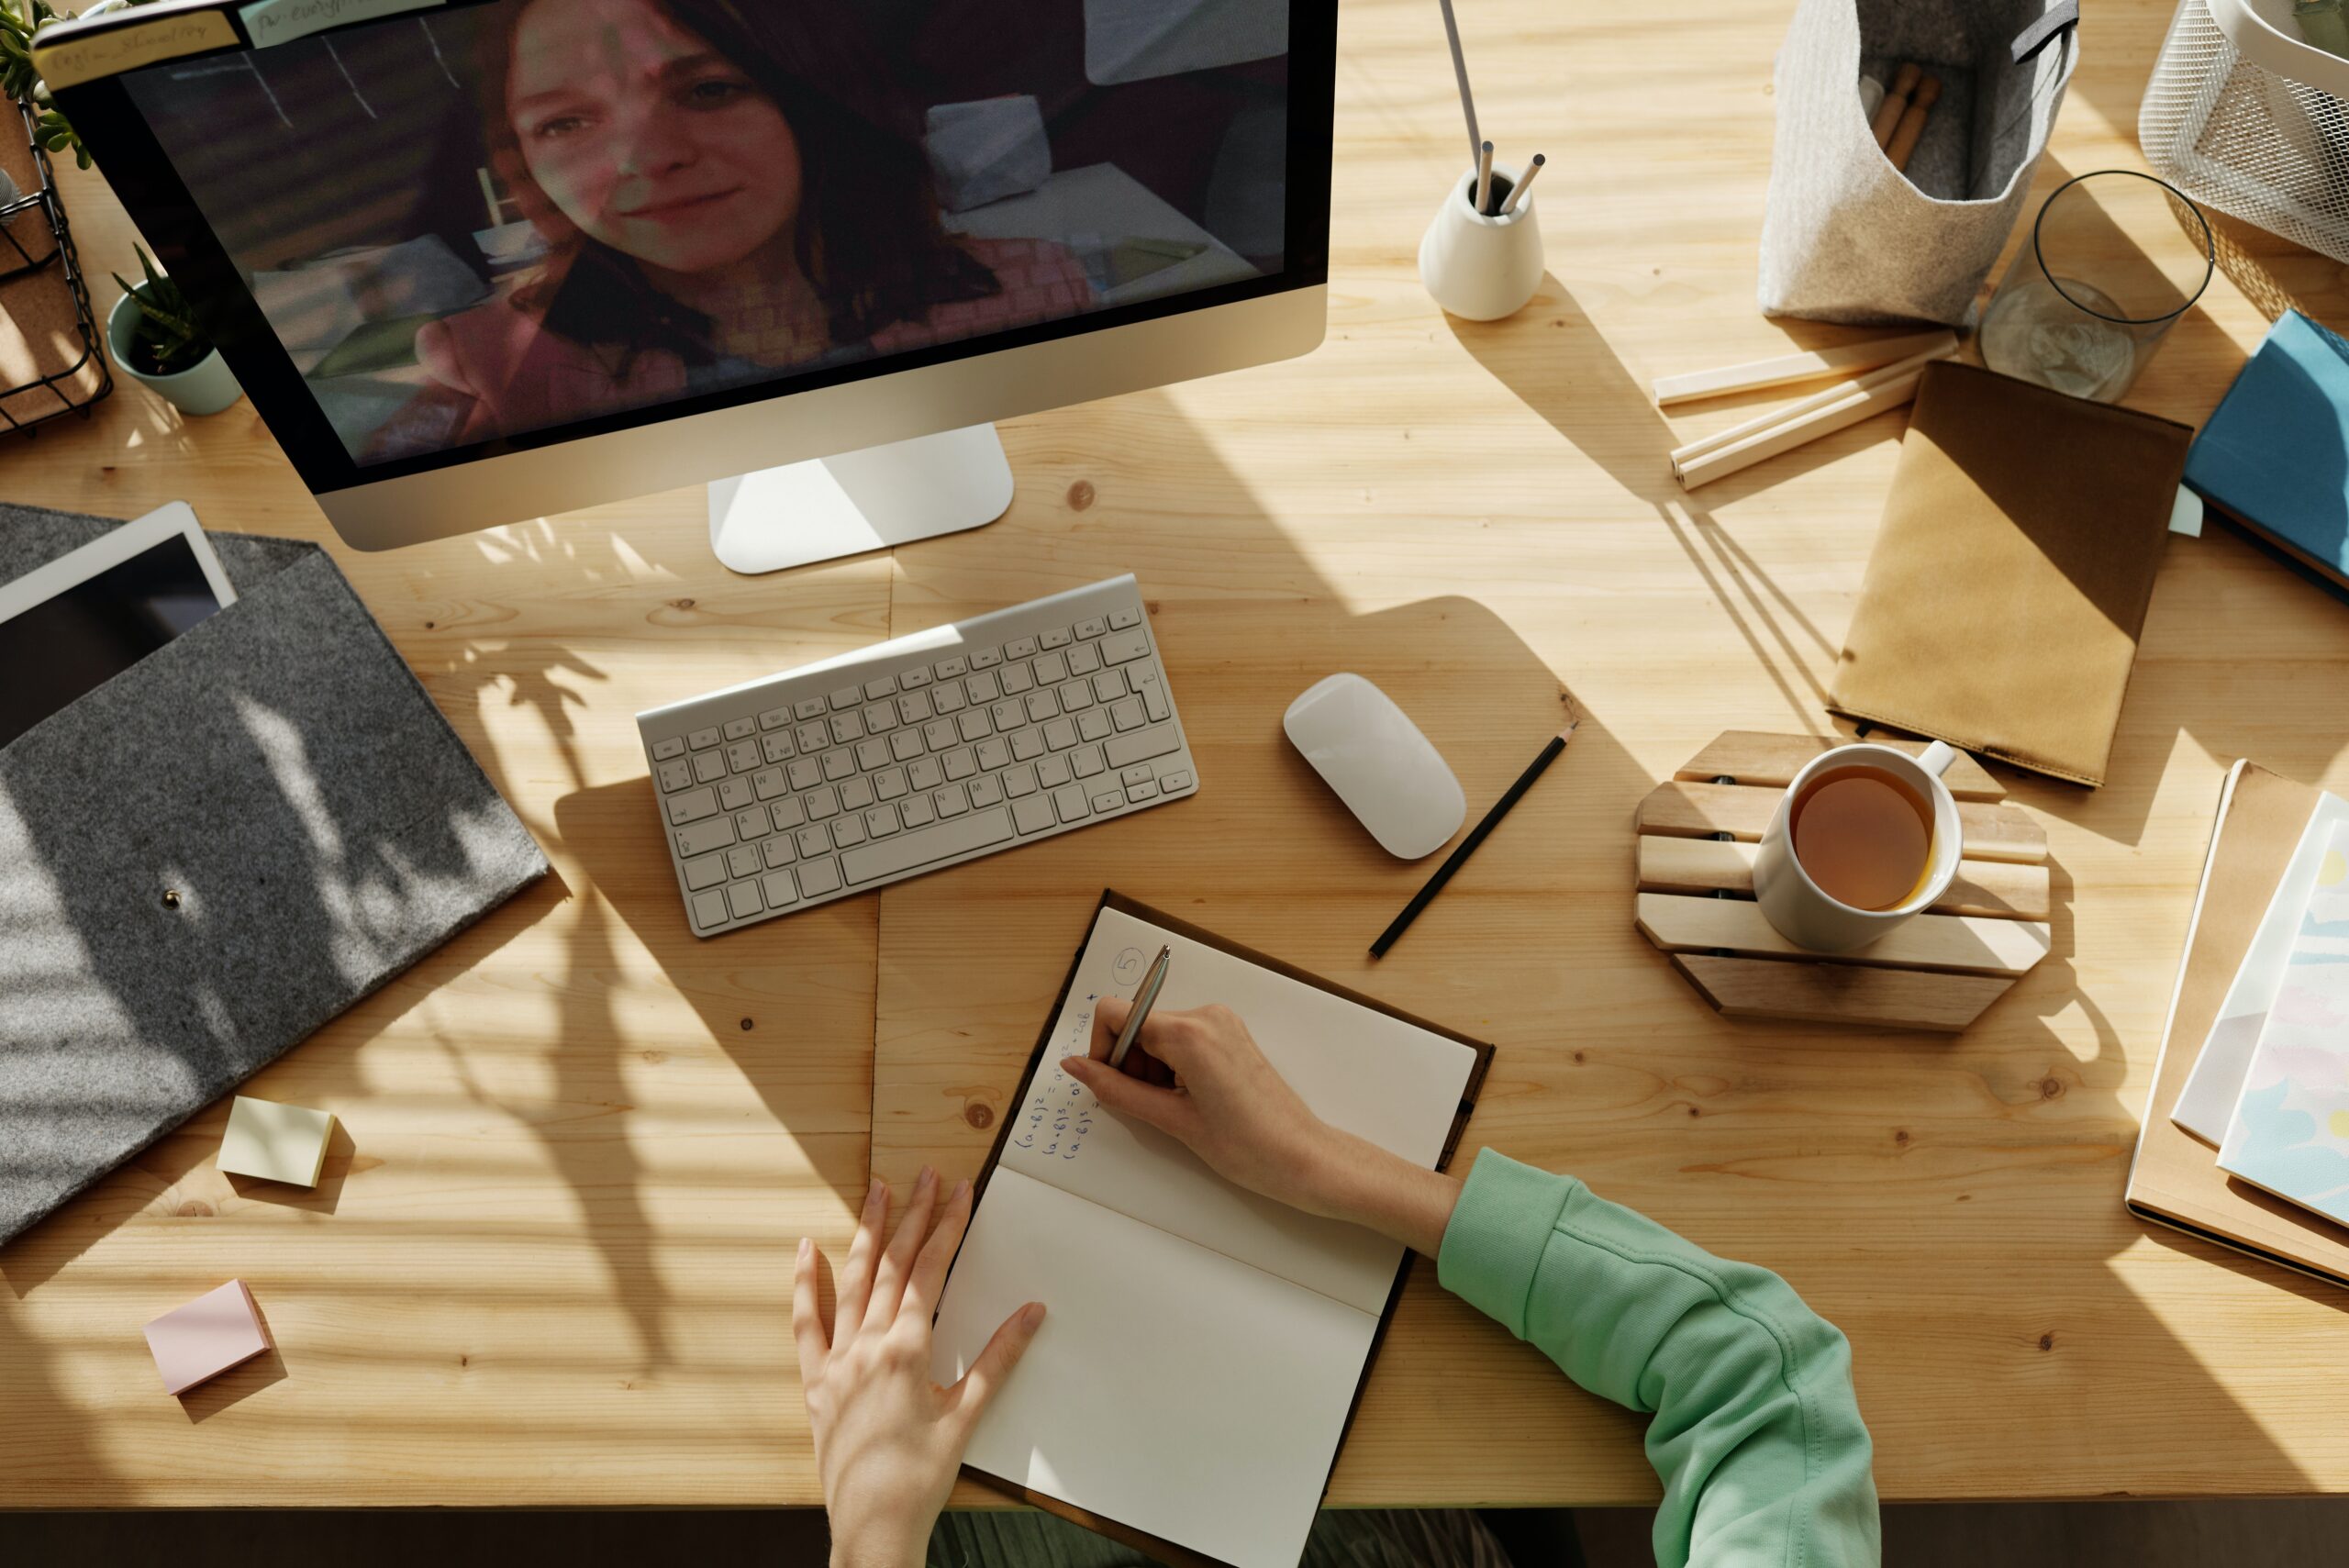 Video meeting, desktop